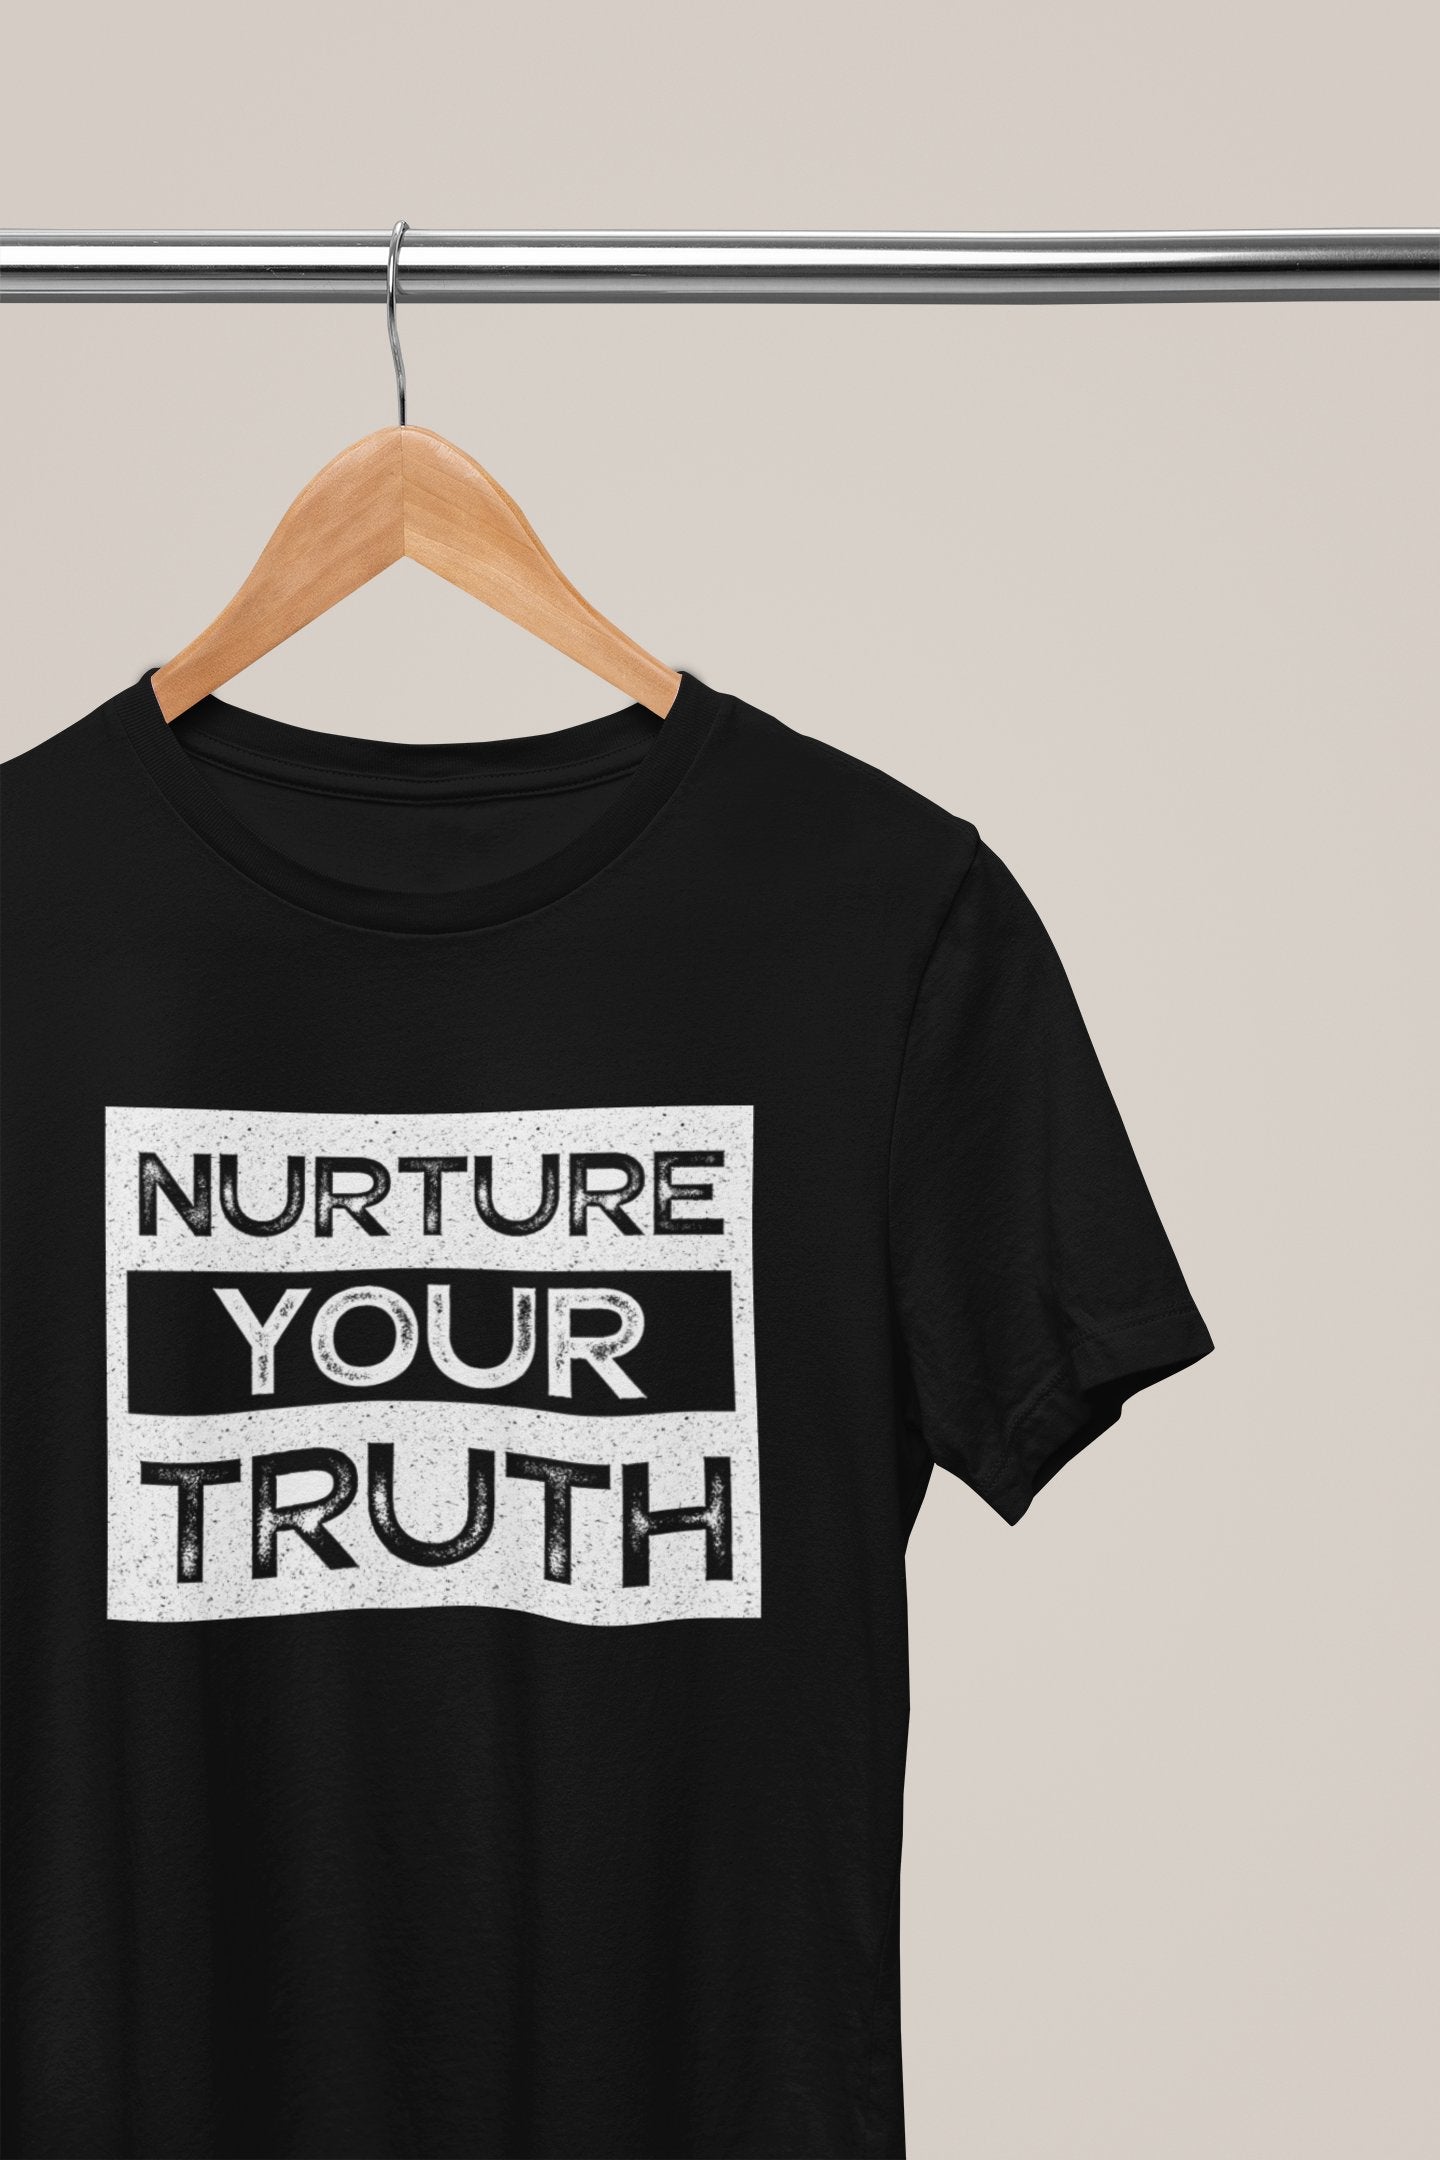 Nurture Your Truth, Hoodies, Sweatshirts, Tees, and Mugs